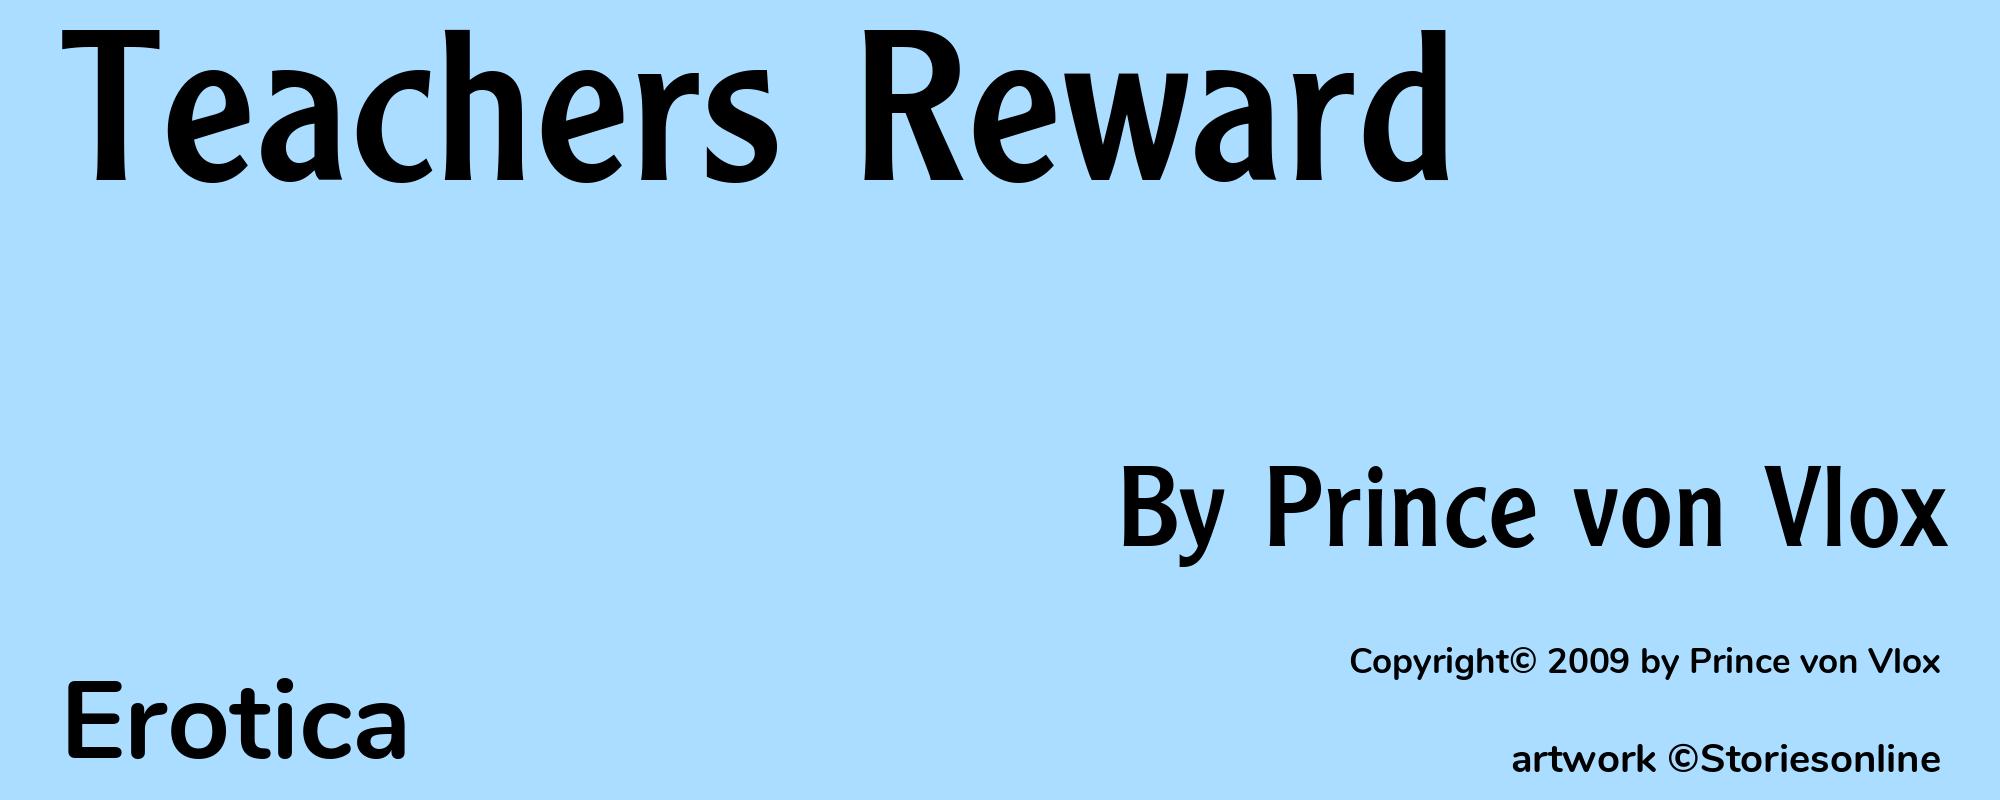 Teachers Reward - Cover